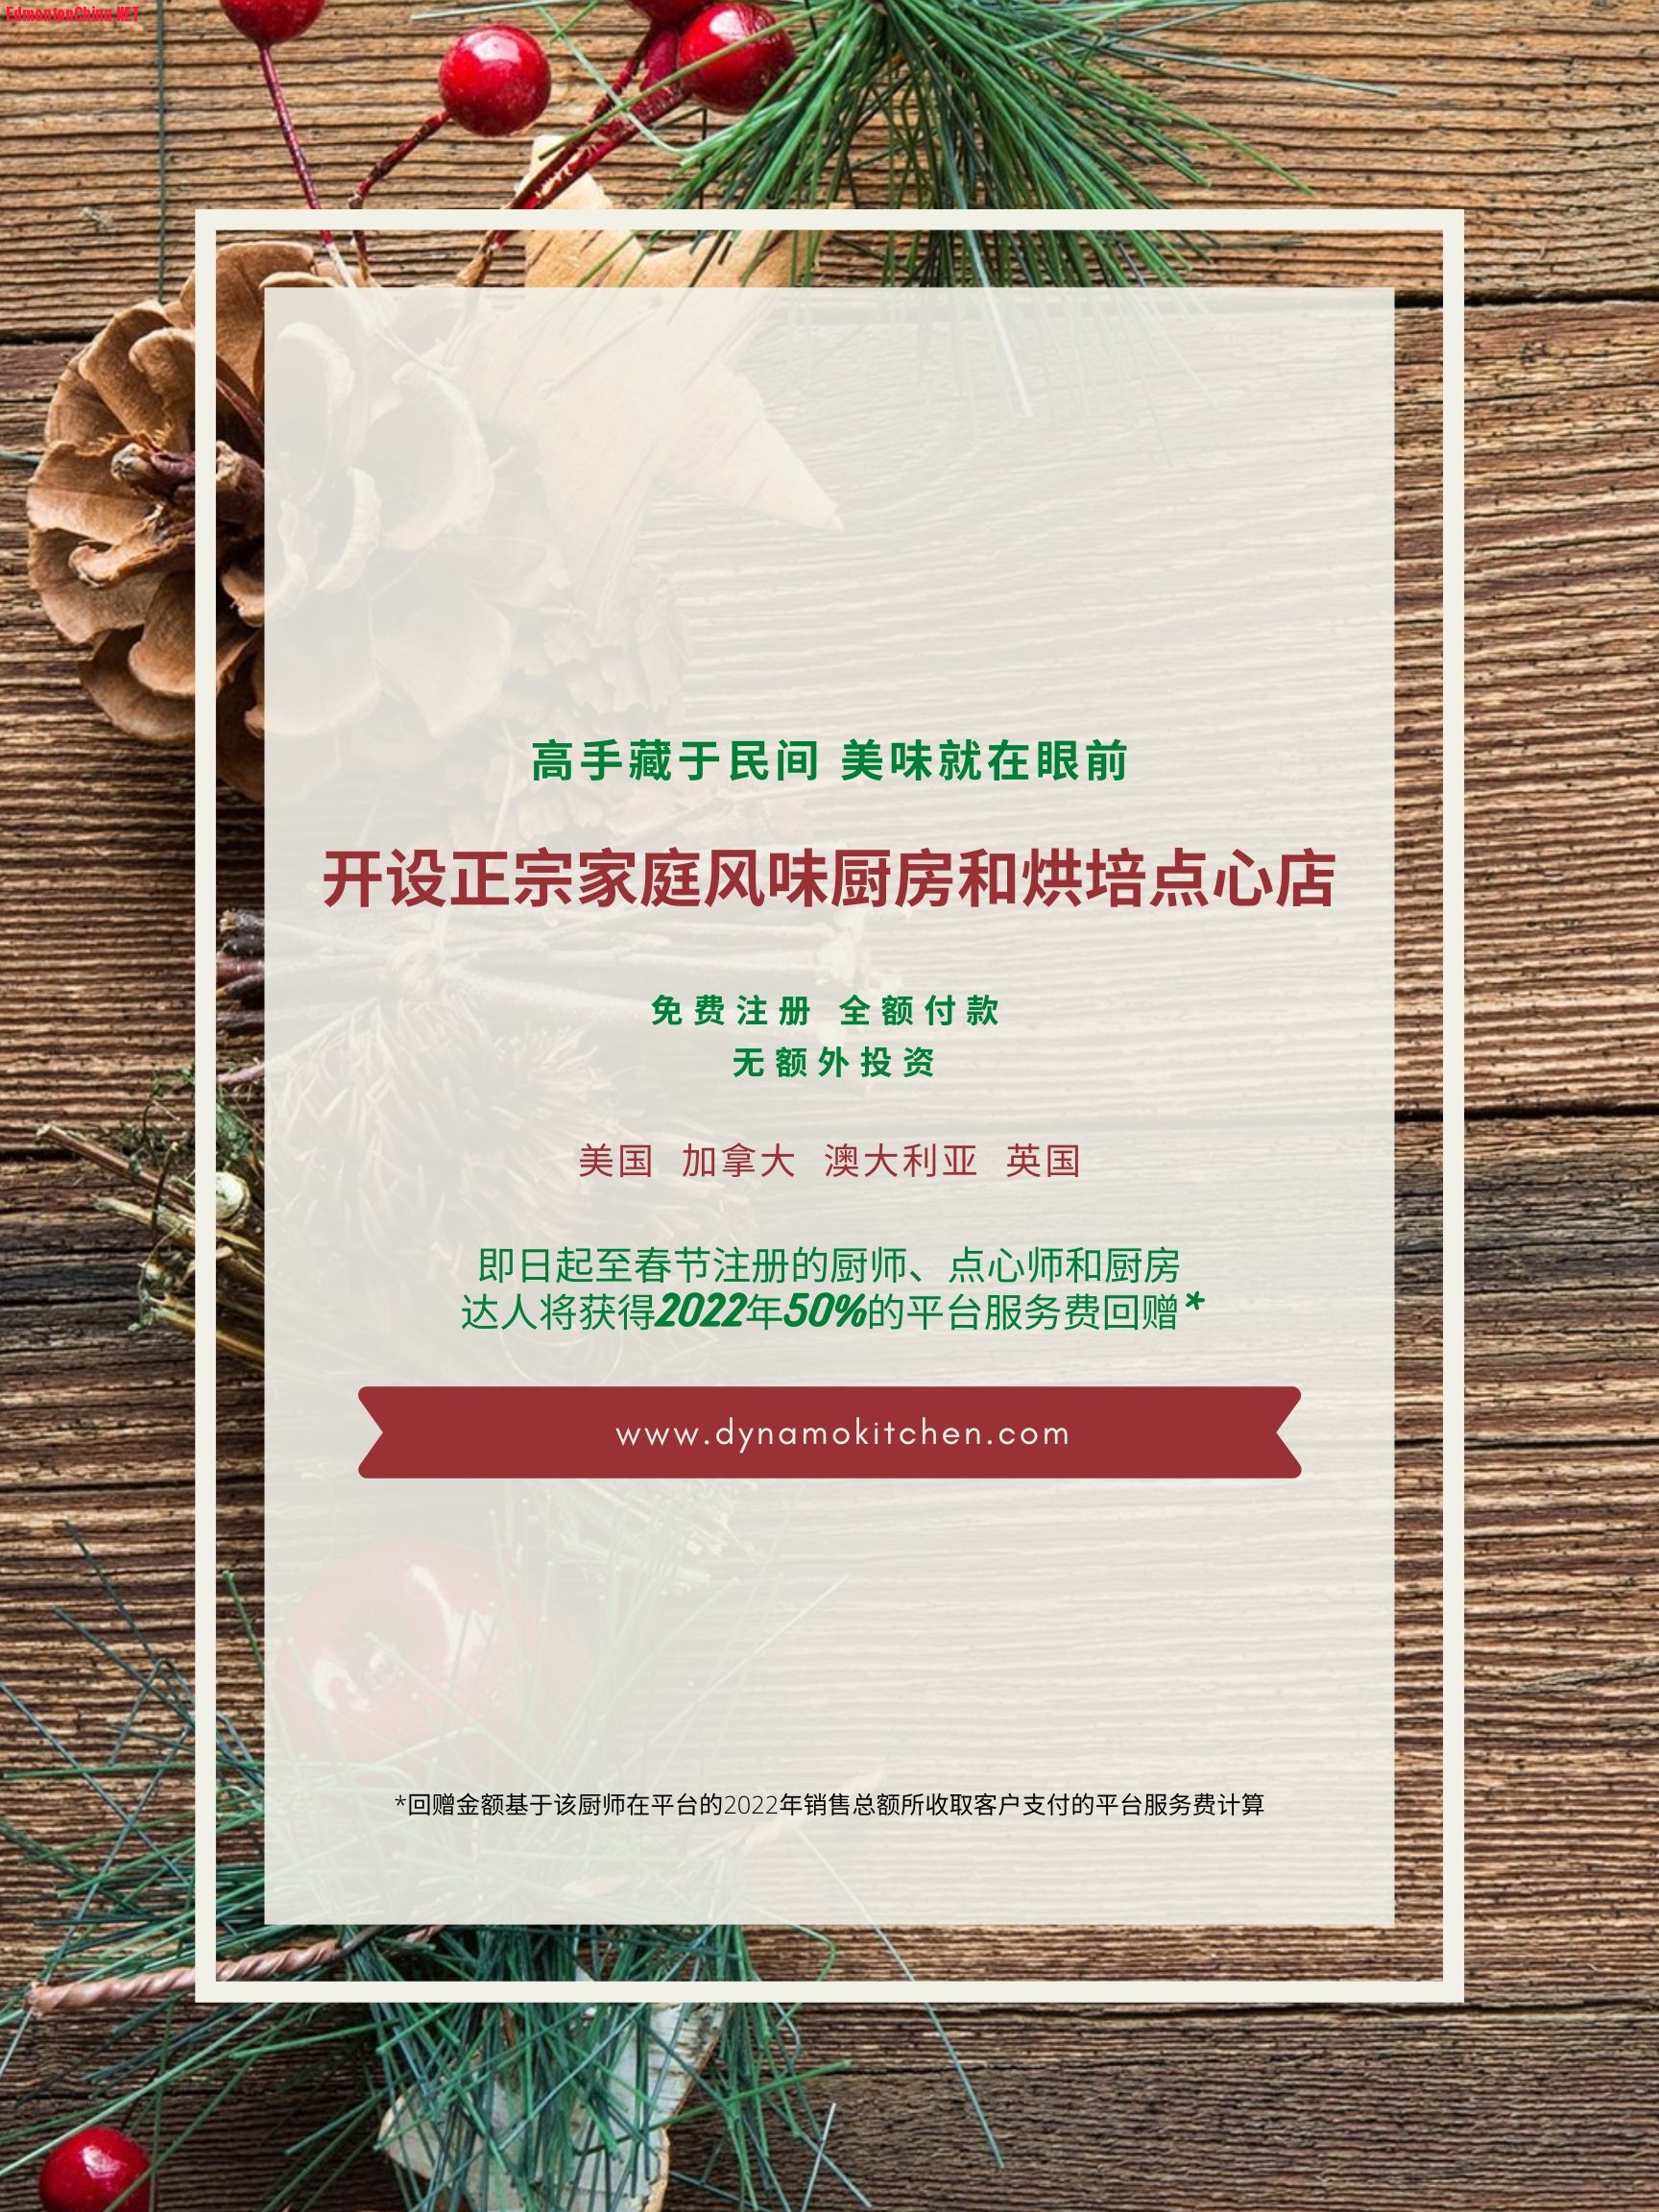 DynamoKitchen Chinese promotion Poster 2.jpg